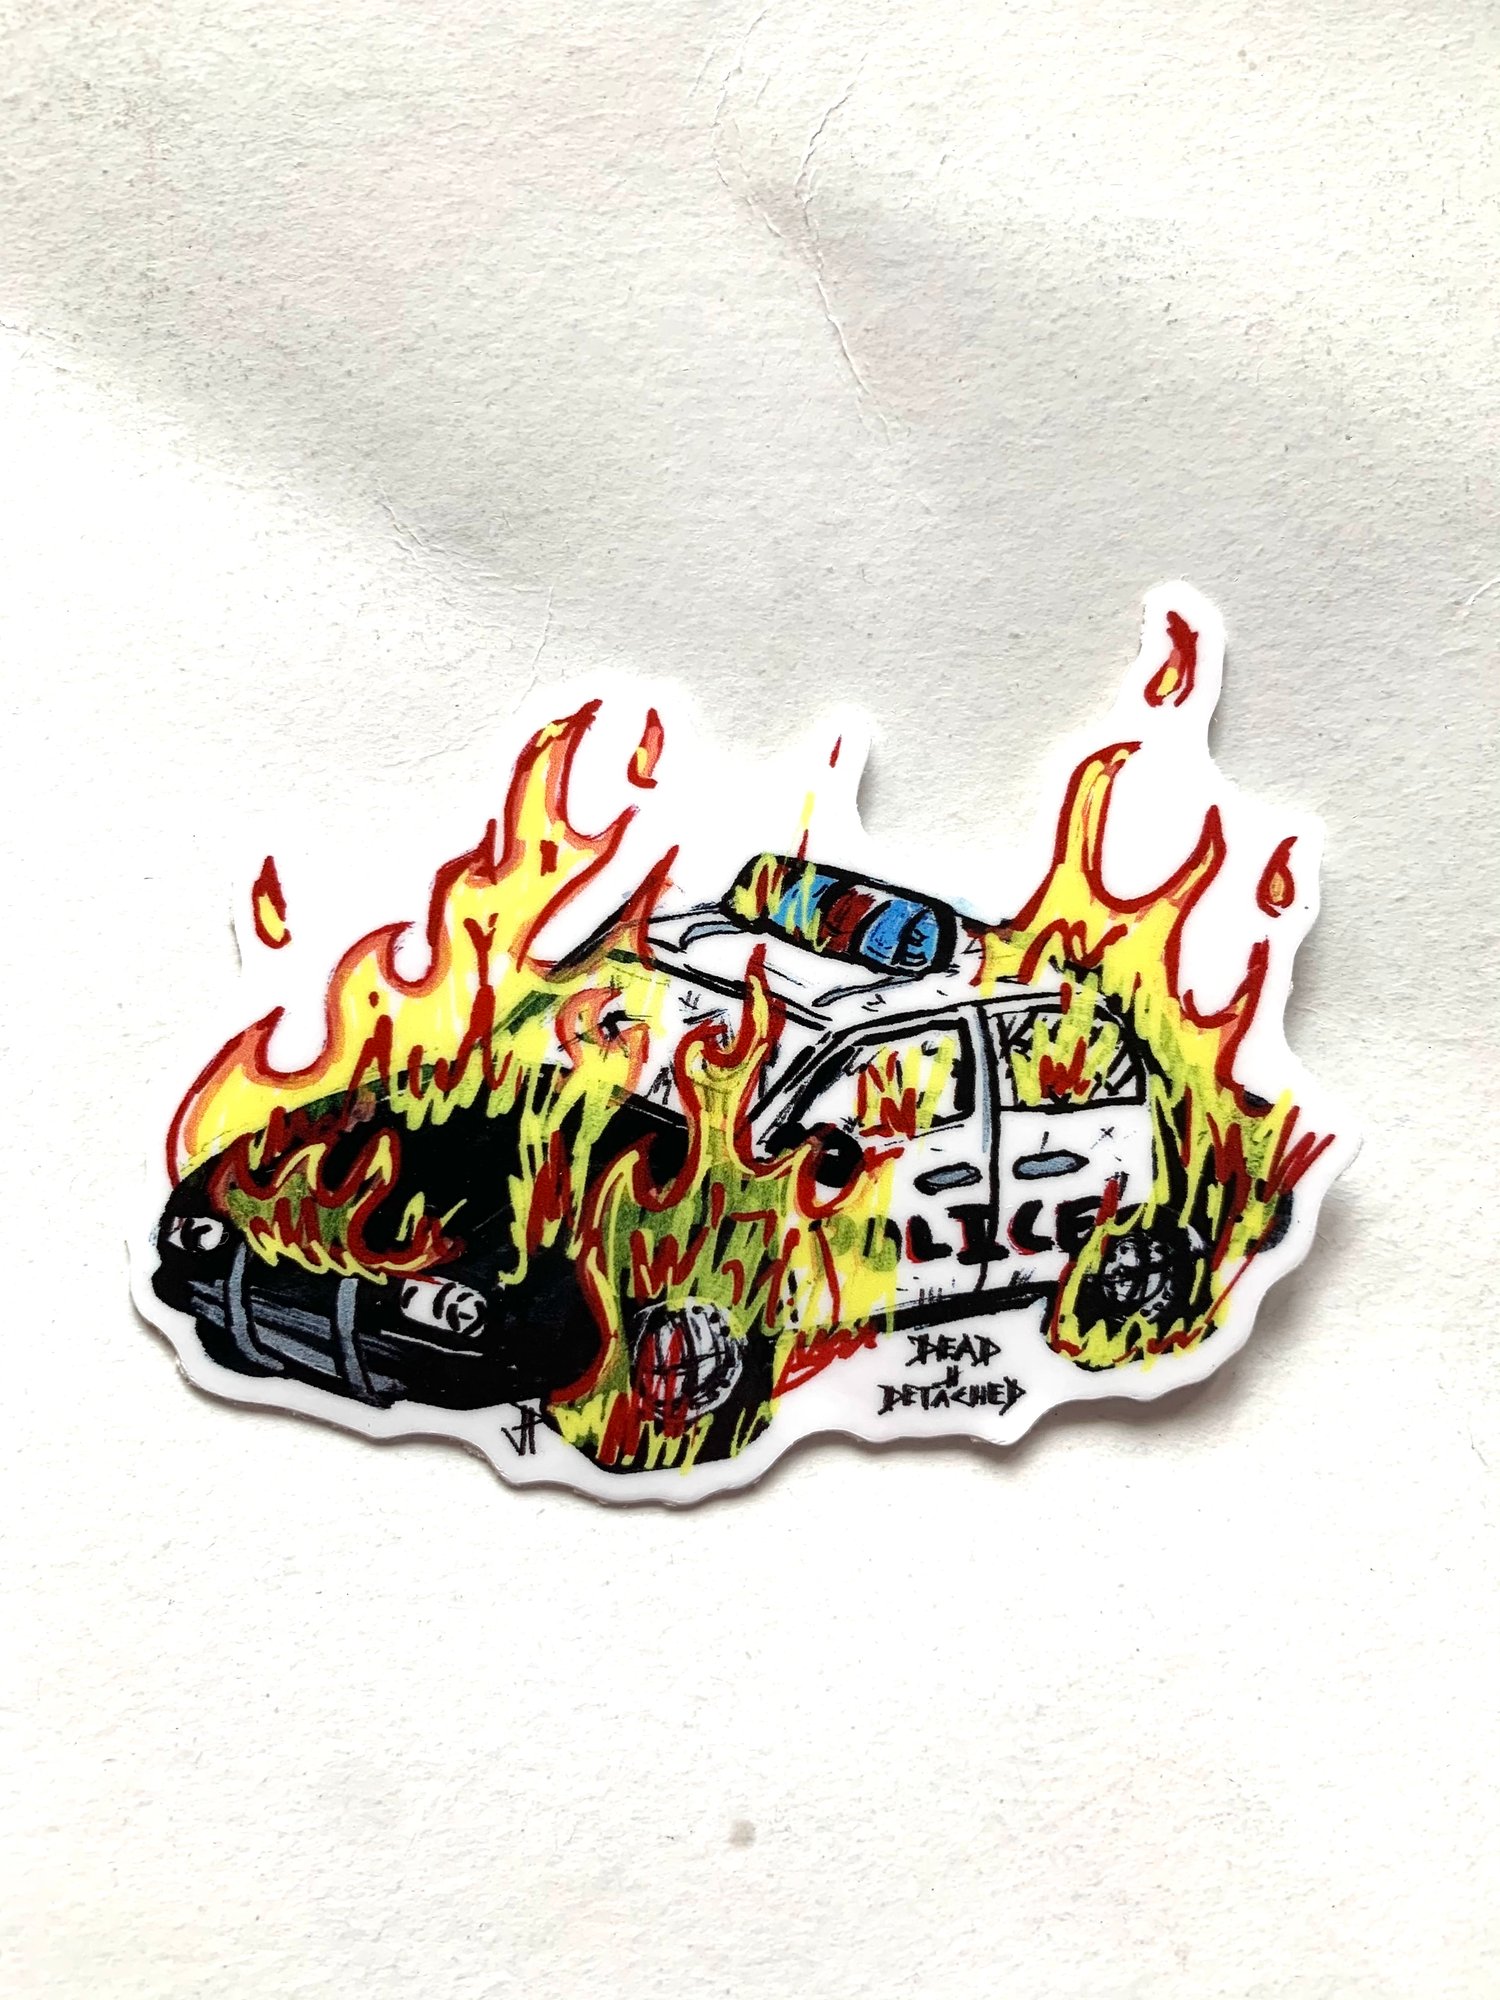 Burning cop car sticker